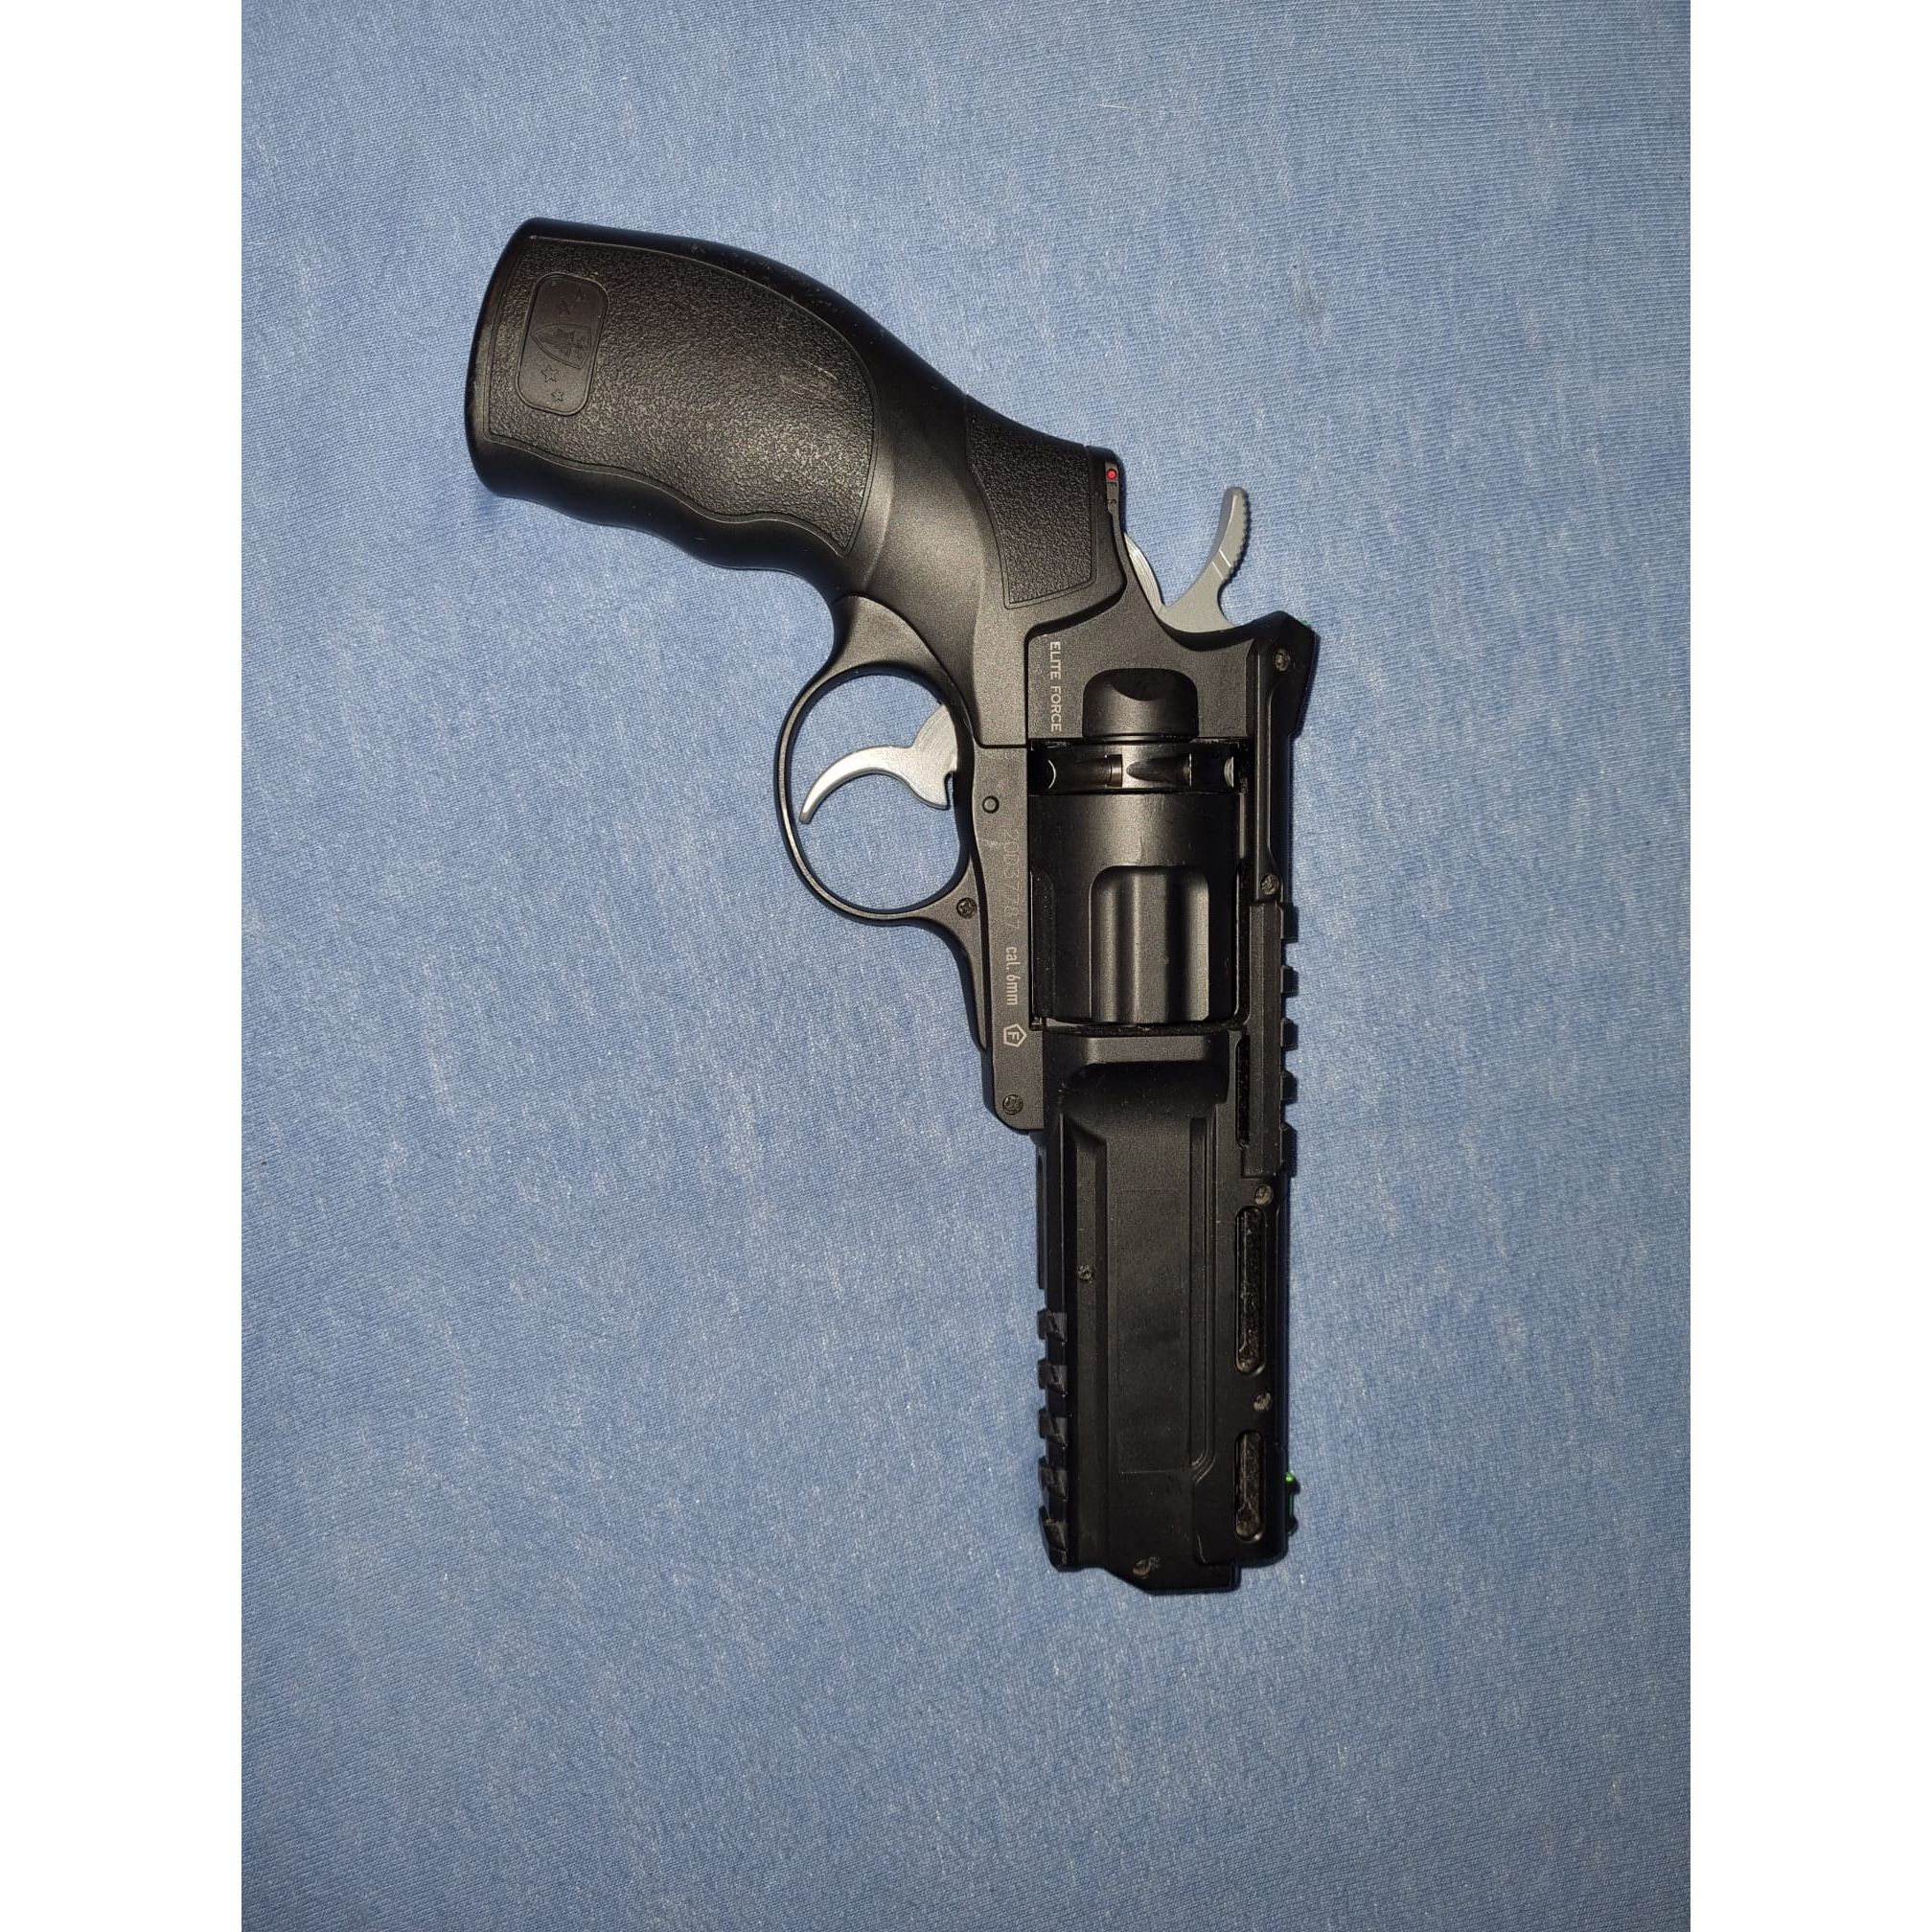 2x Elite Force H8R Revolver